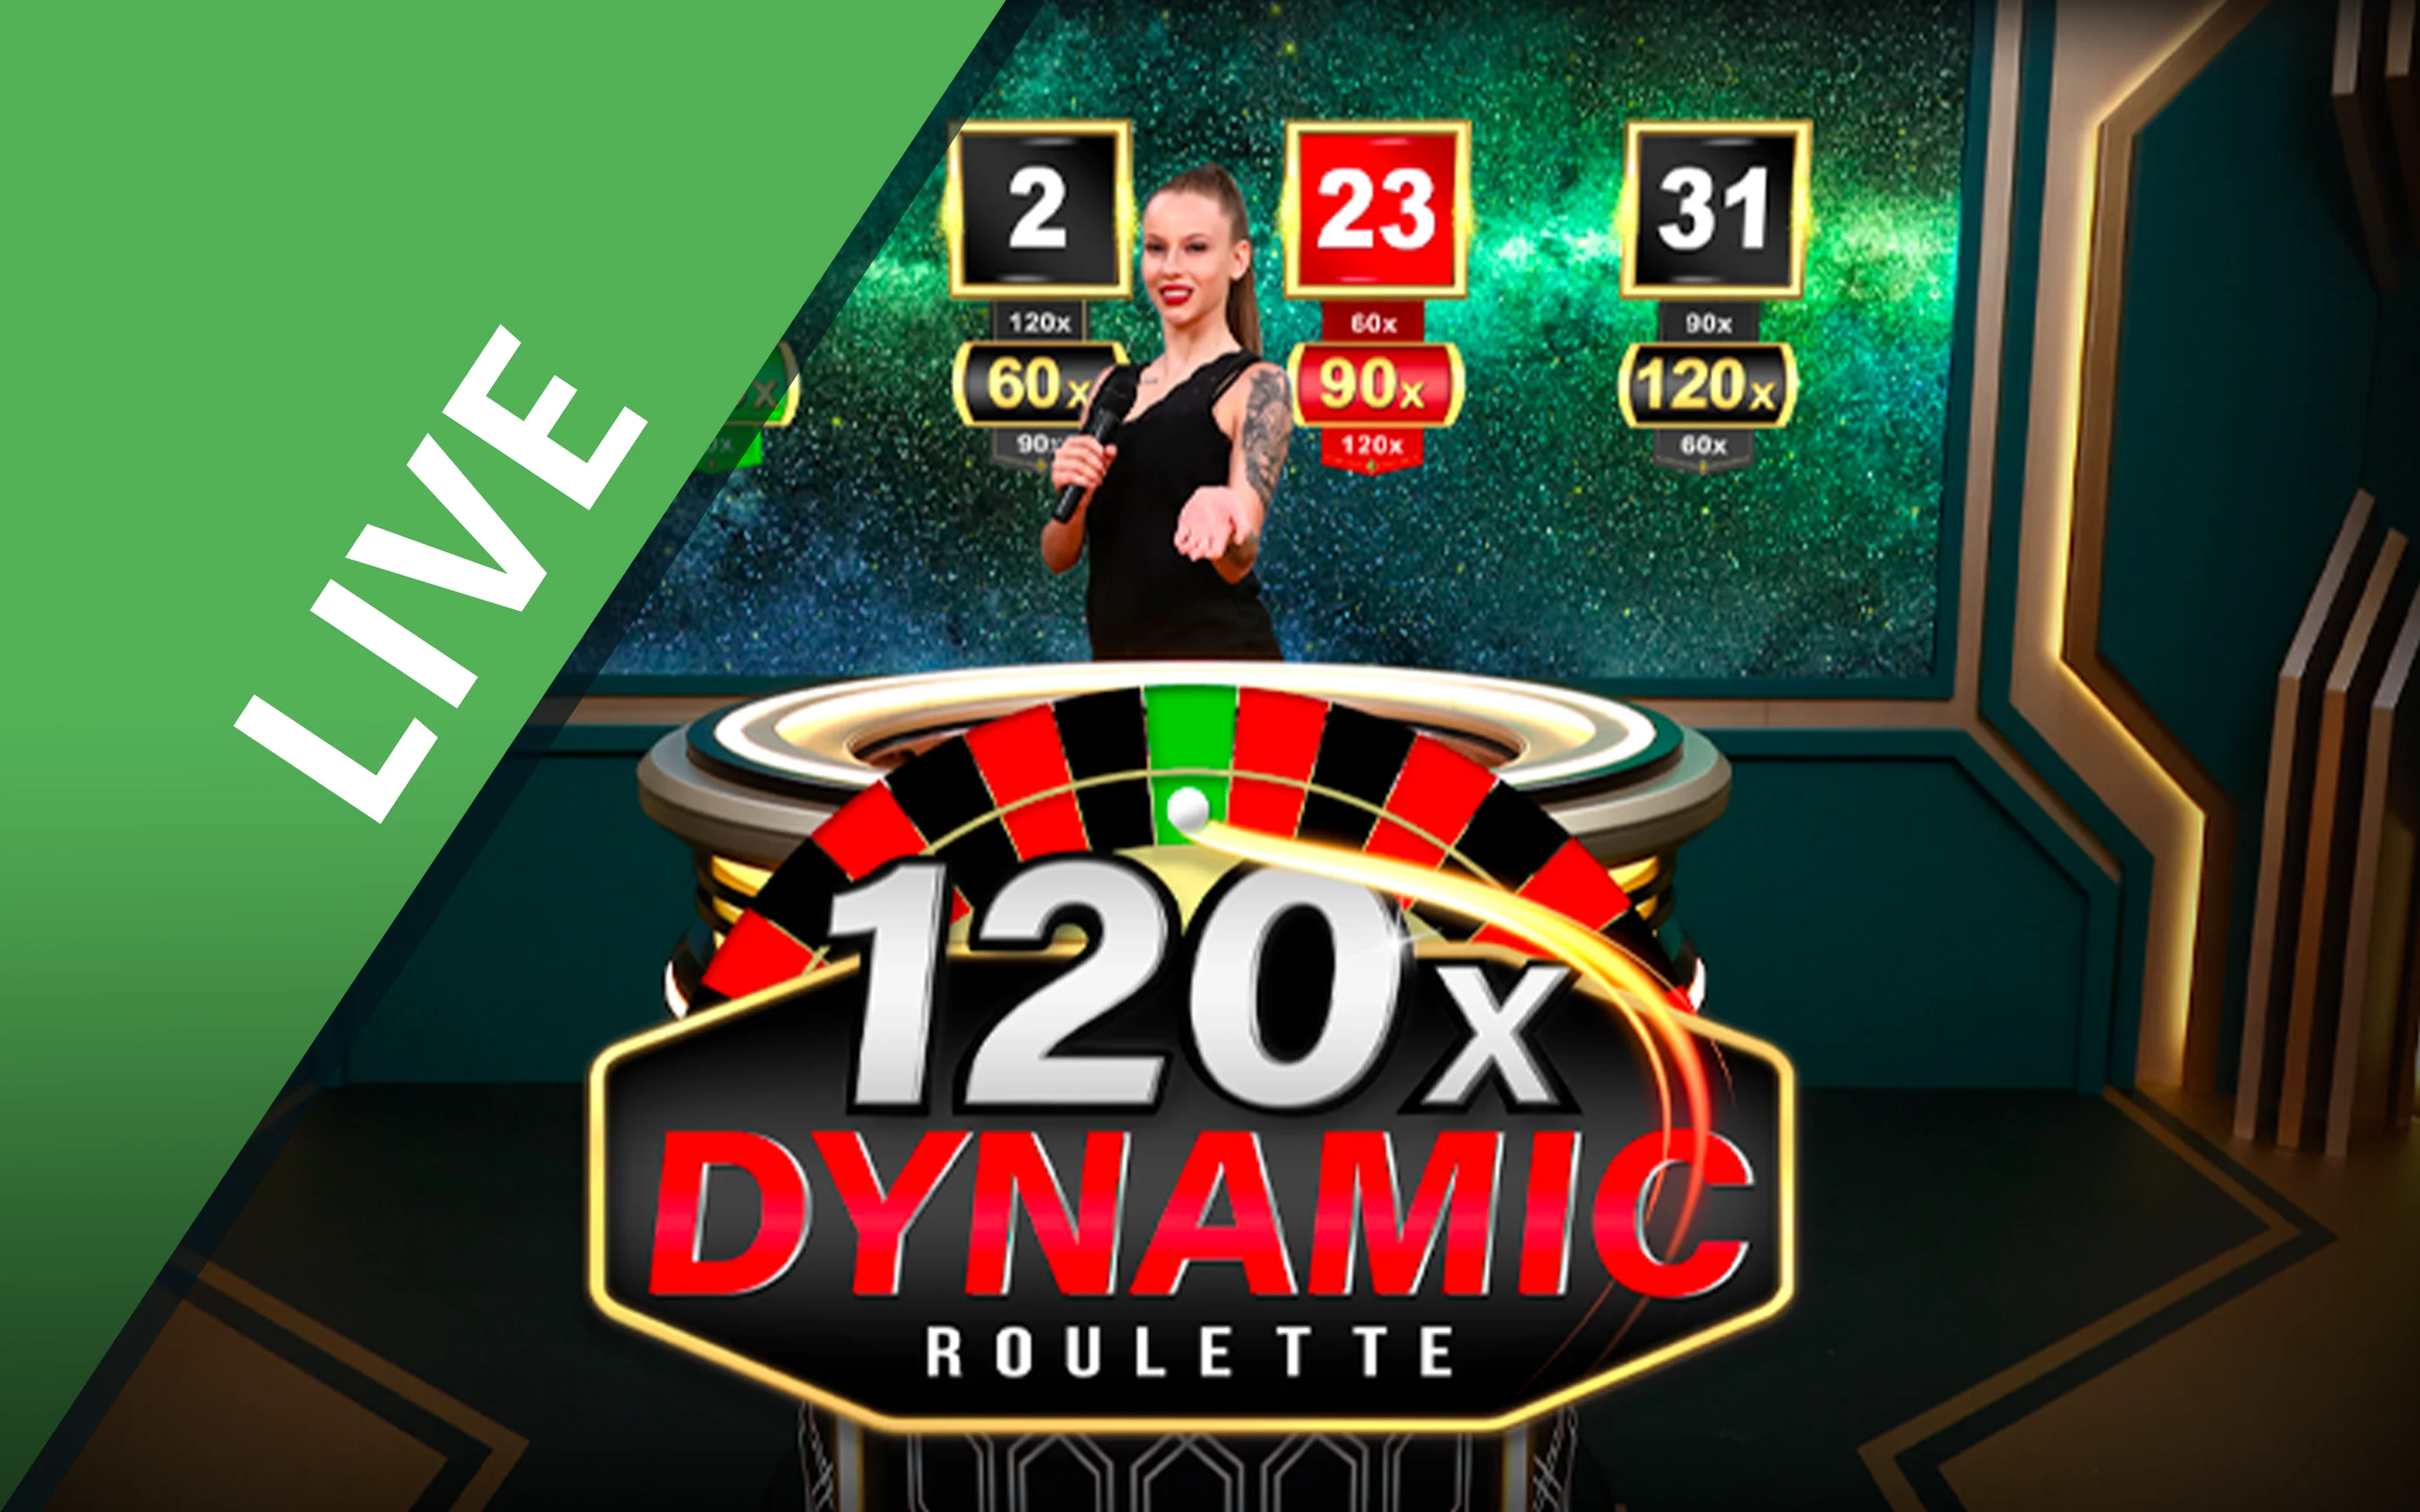 Jogue Dynamic Roulette 120x no casino online Starcasino.be 